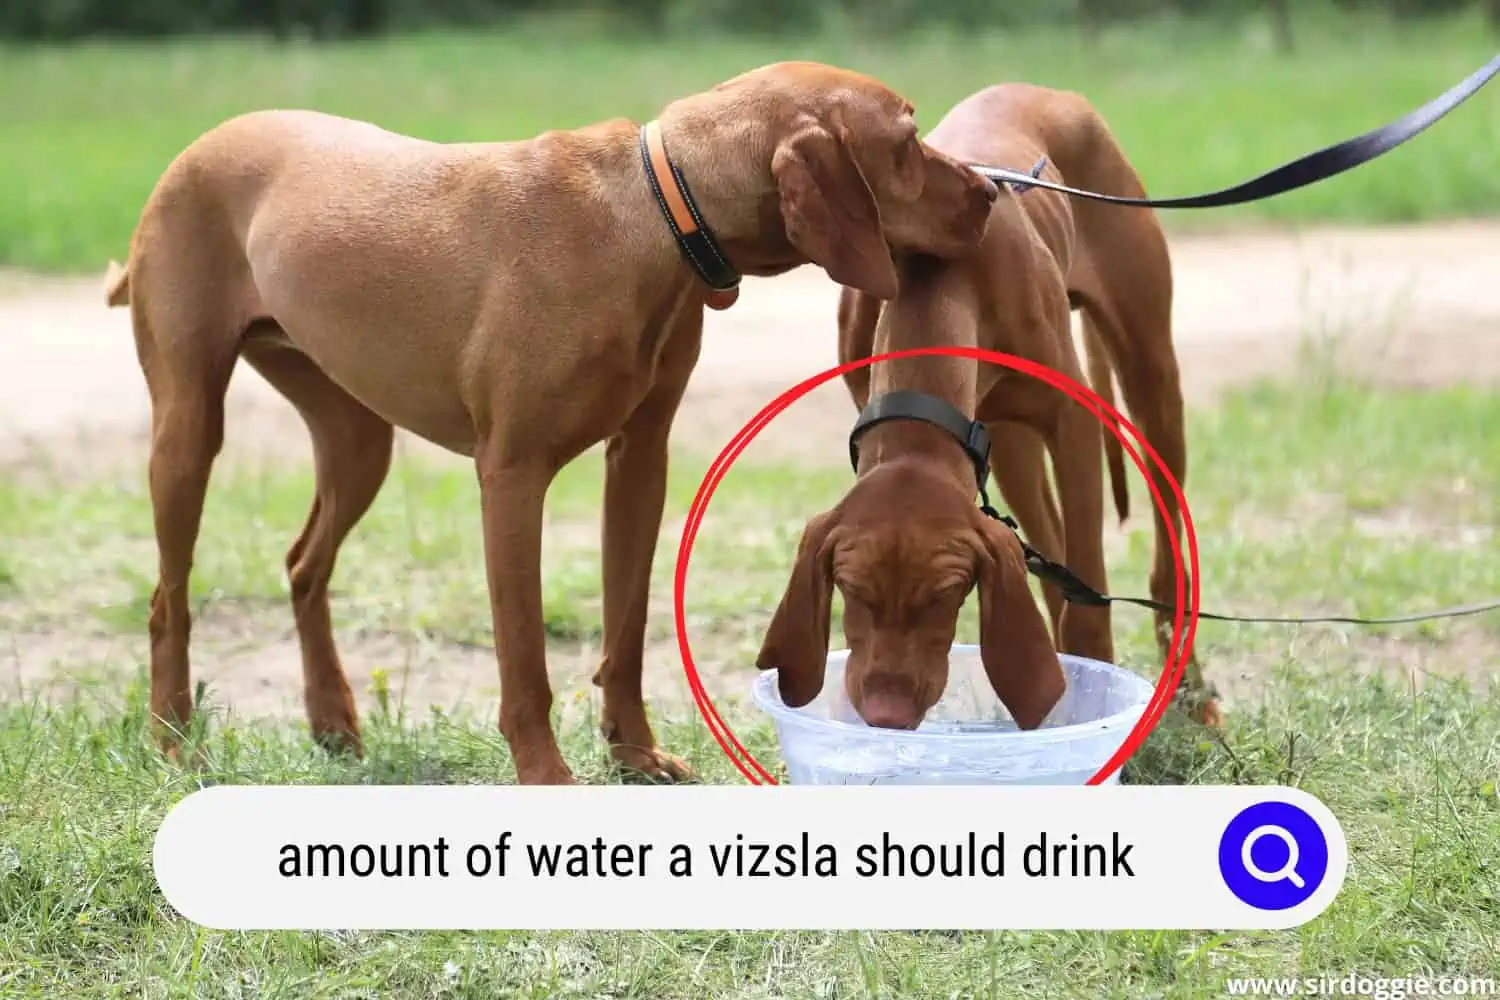 Vizsla dog drinking water in a bowl